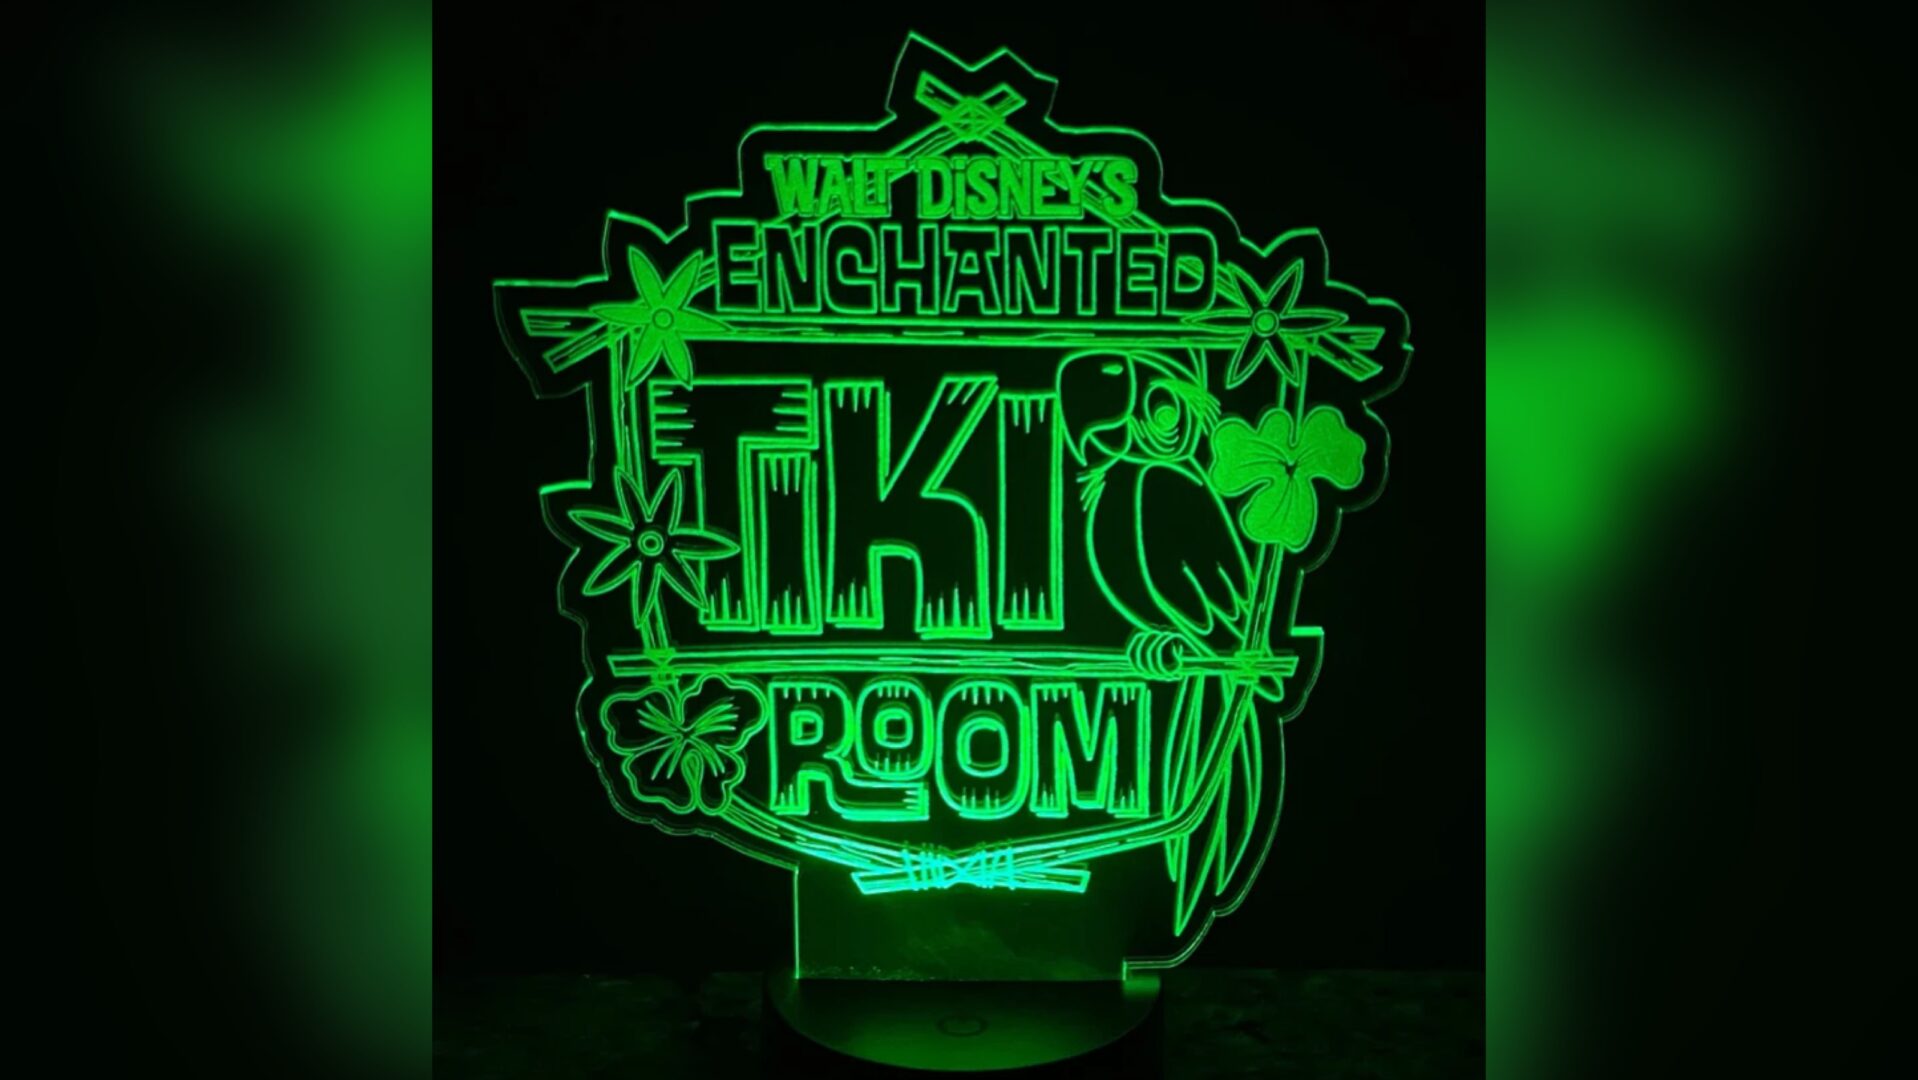 Fun Enchanted Tiki Room Nightlight To Light Up Your Home!